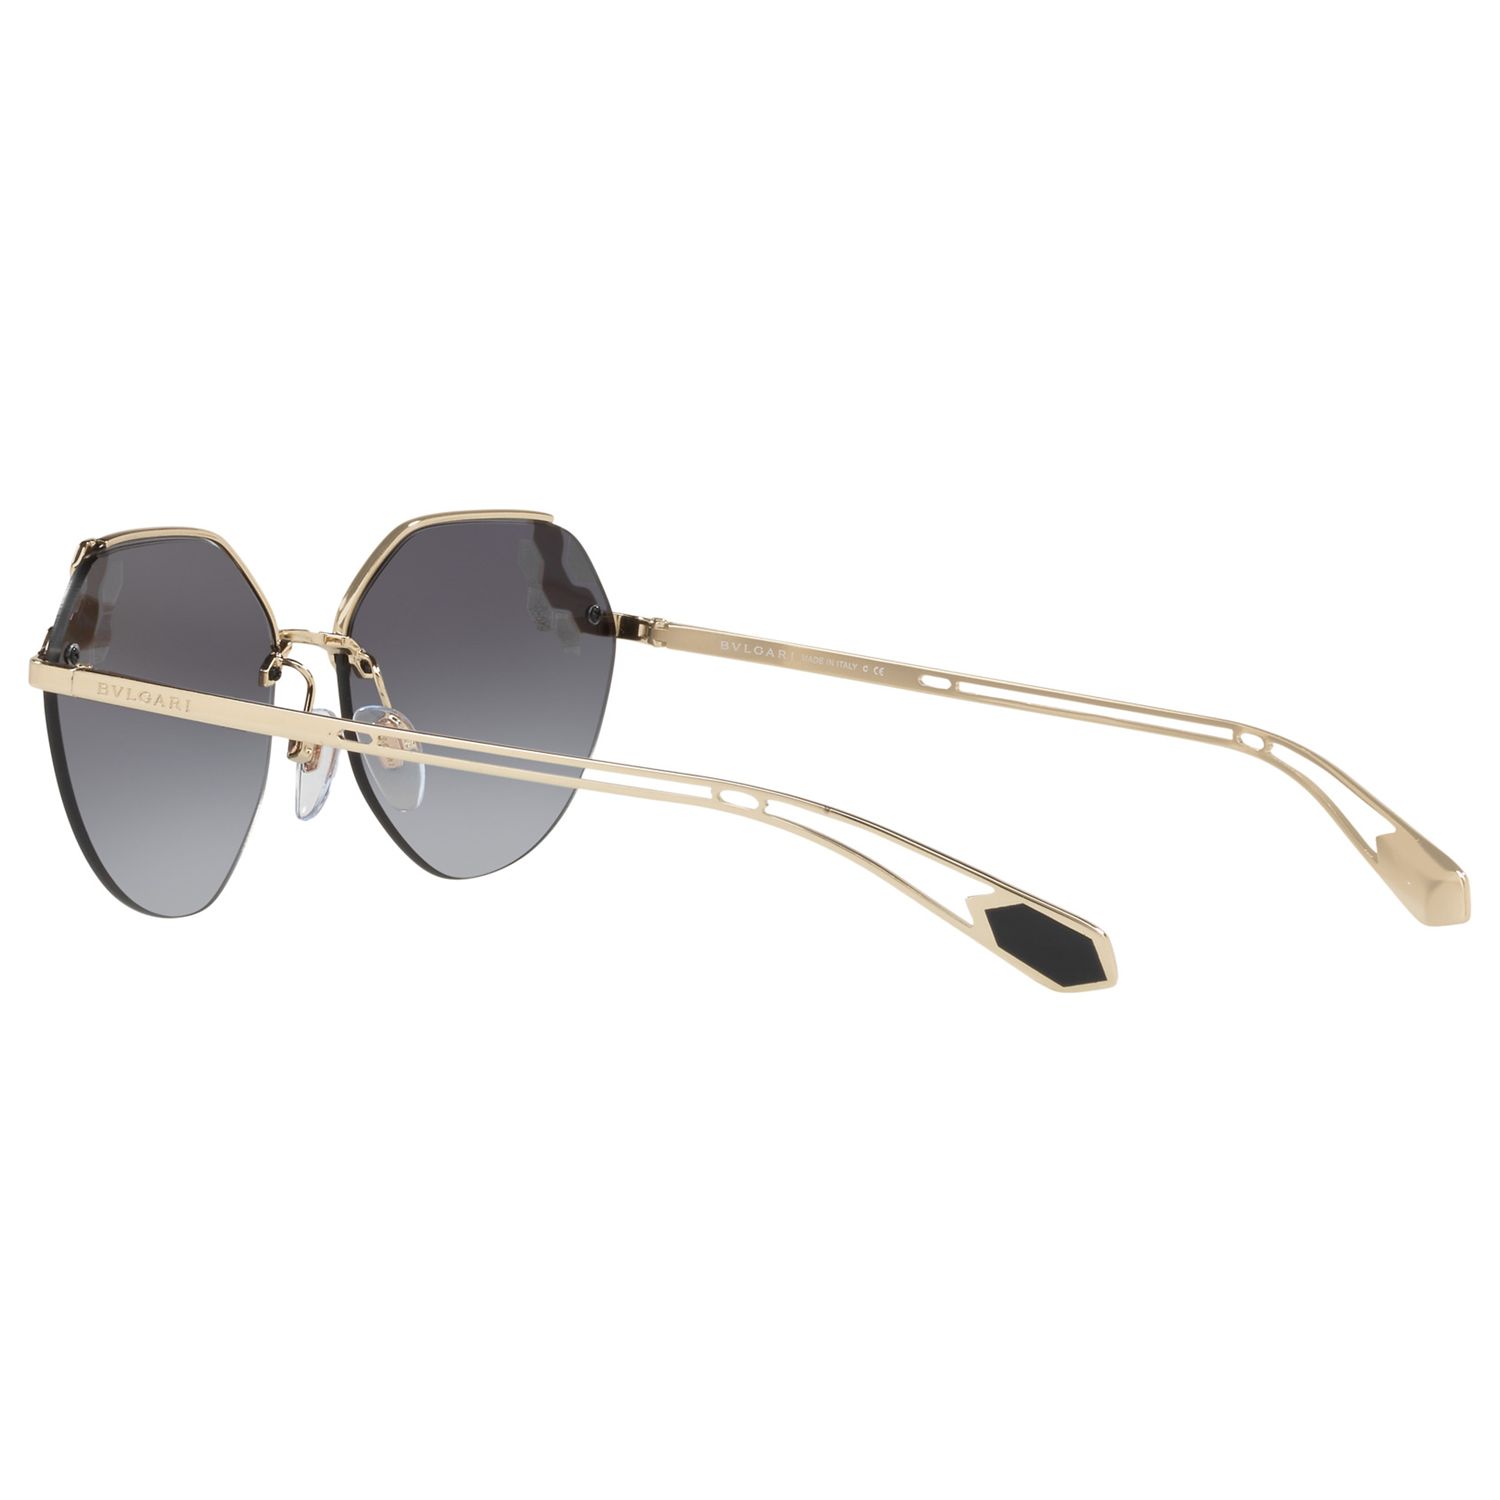 BVLGARI BV6099 Geometric Sunglasses, Gold/Grey Gradient